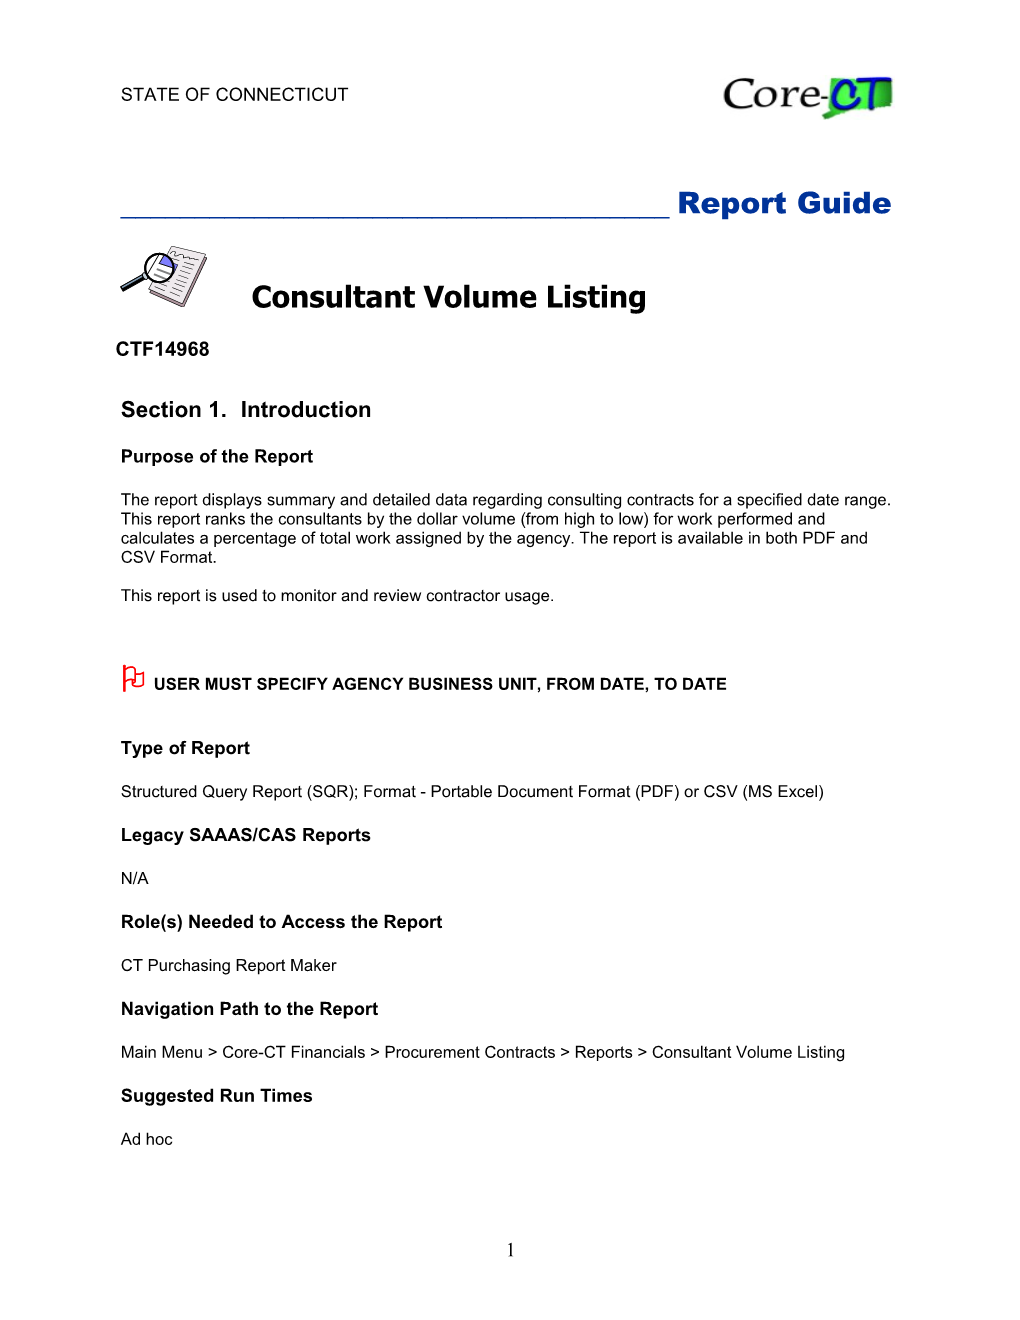 Consultant Volume Listing (CTF14968)